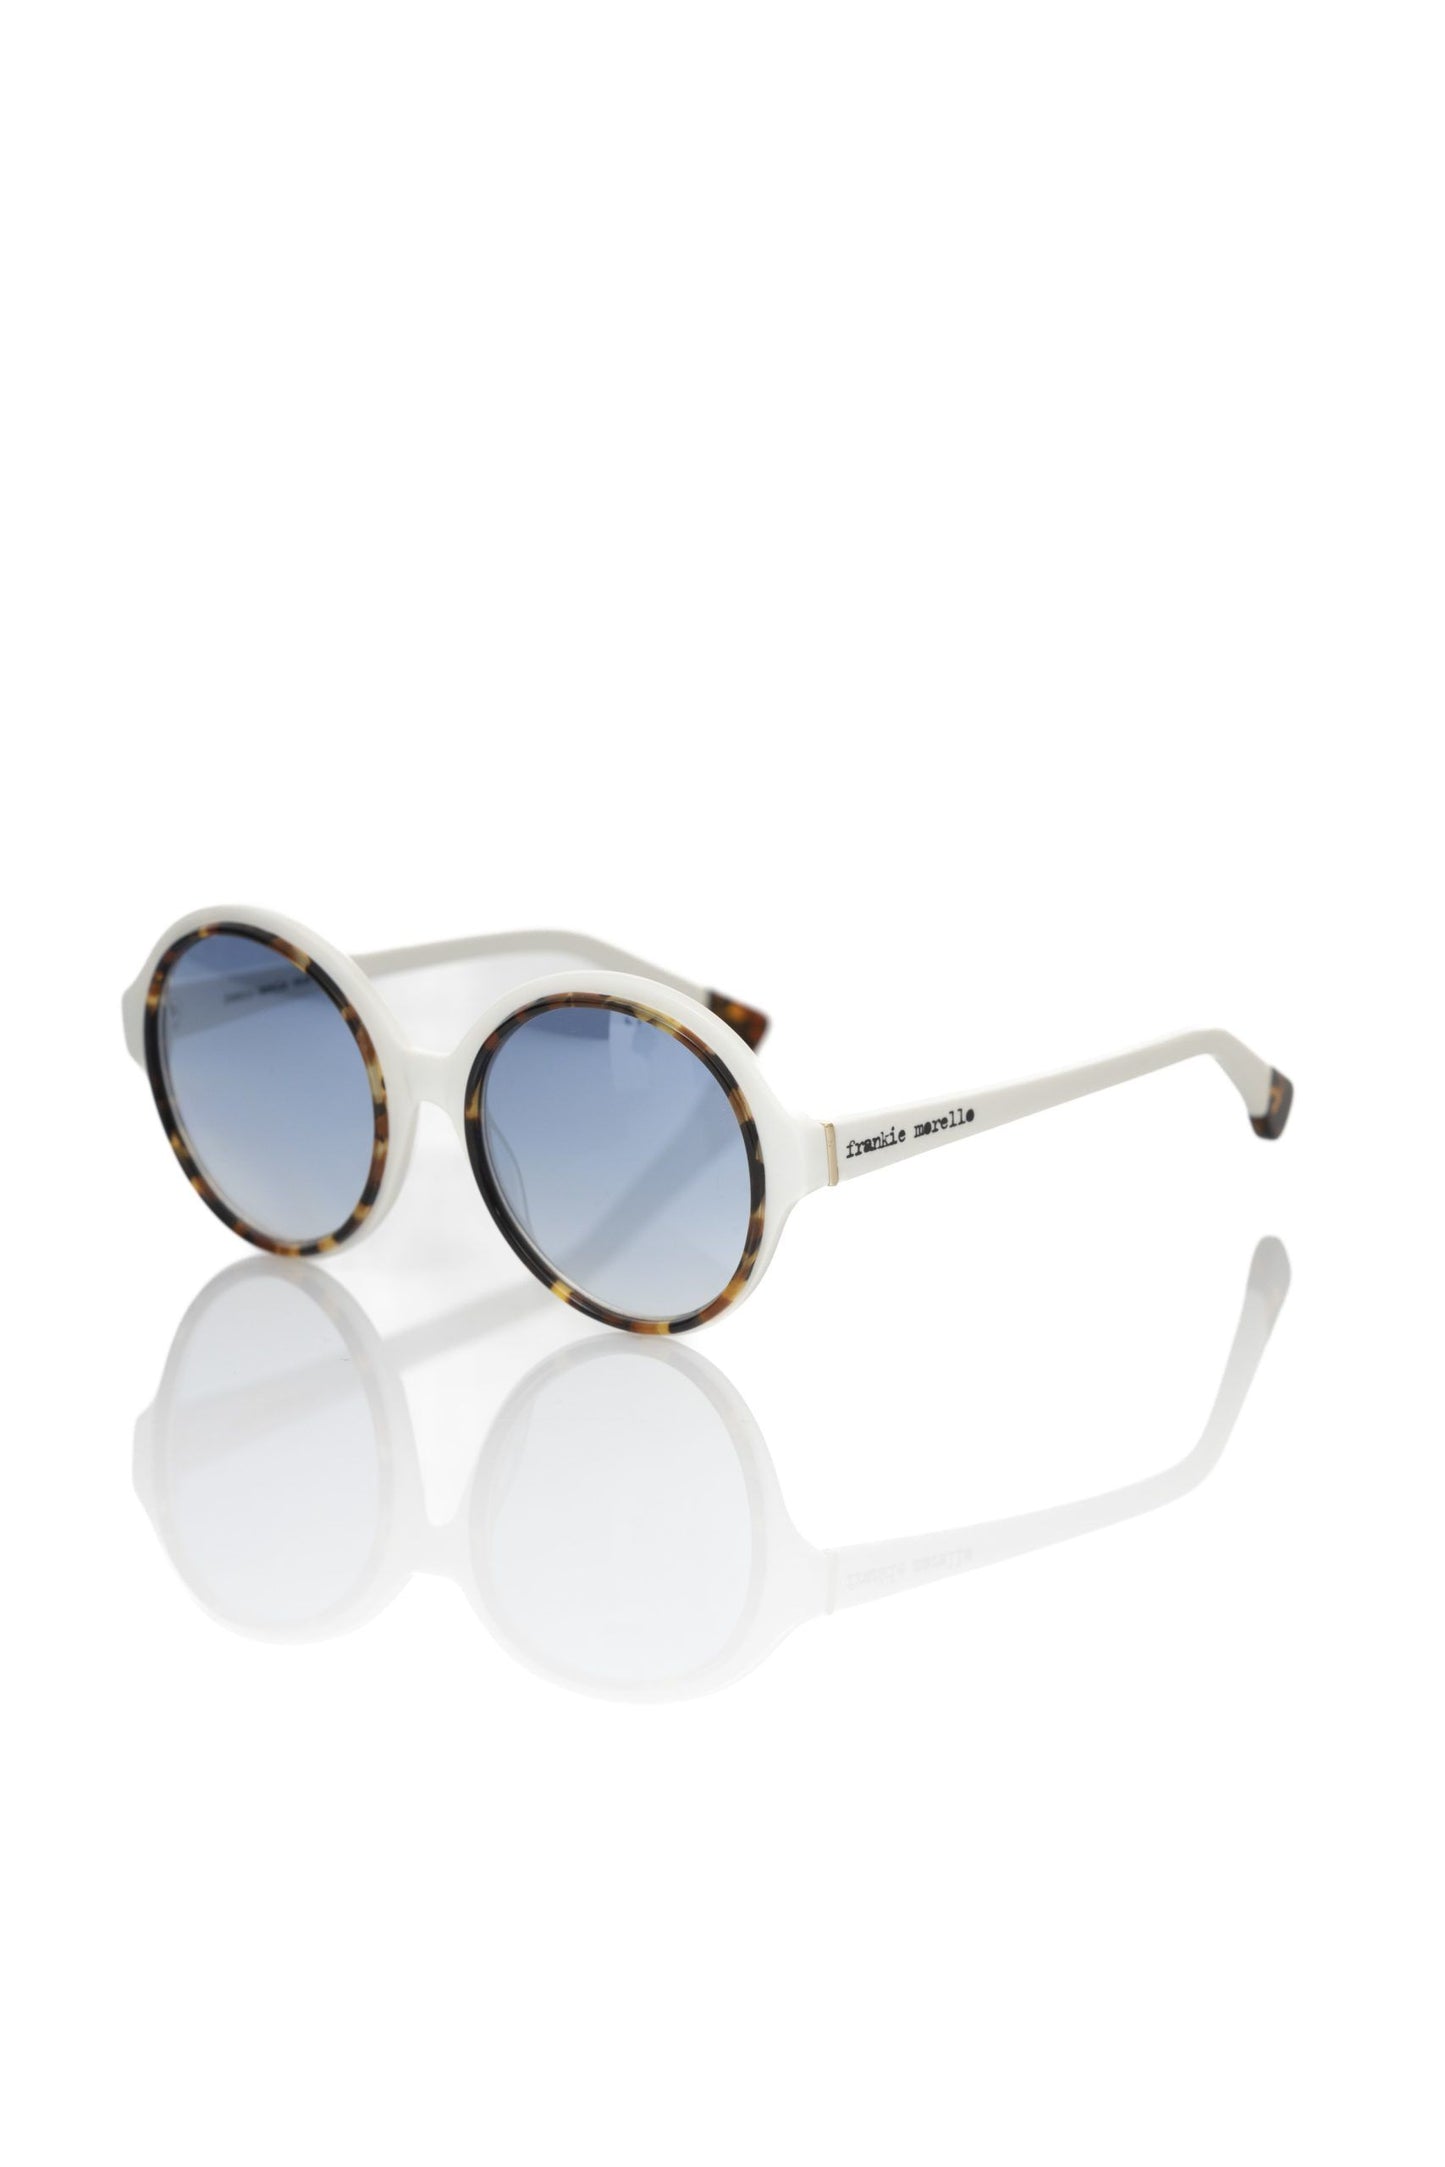 Frankie Morello FRMO-22074 White Acetate Sunglasses